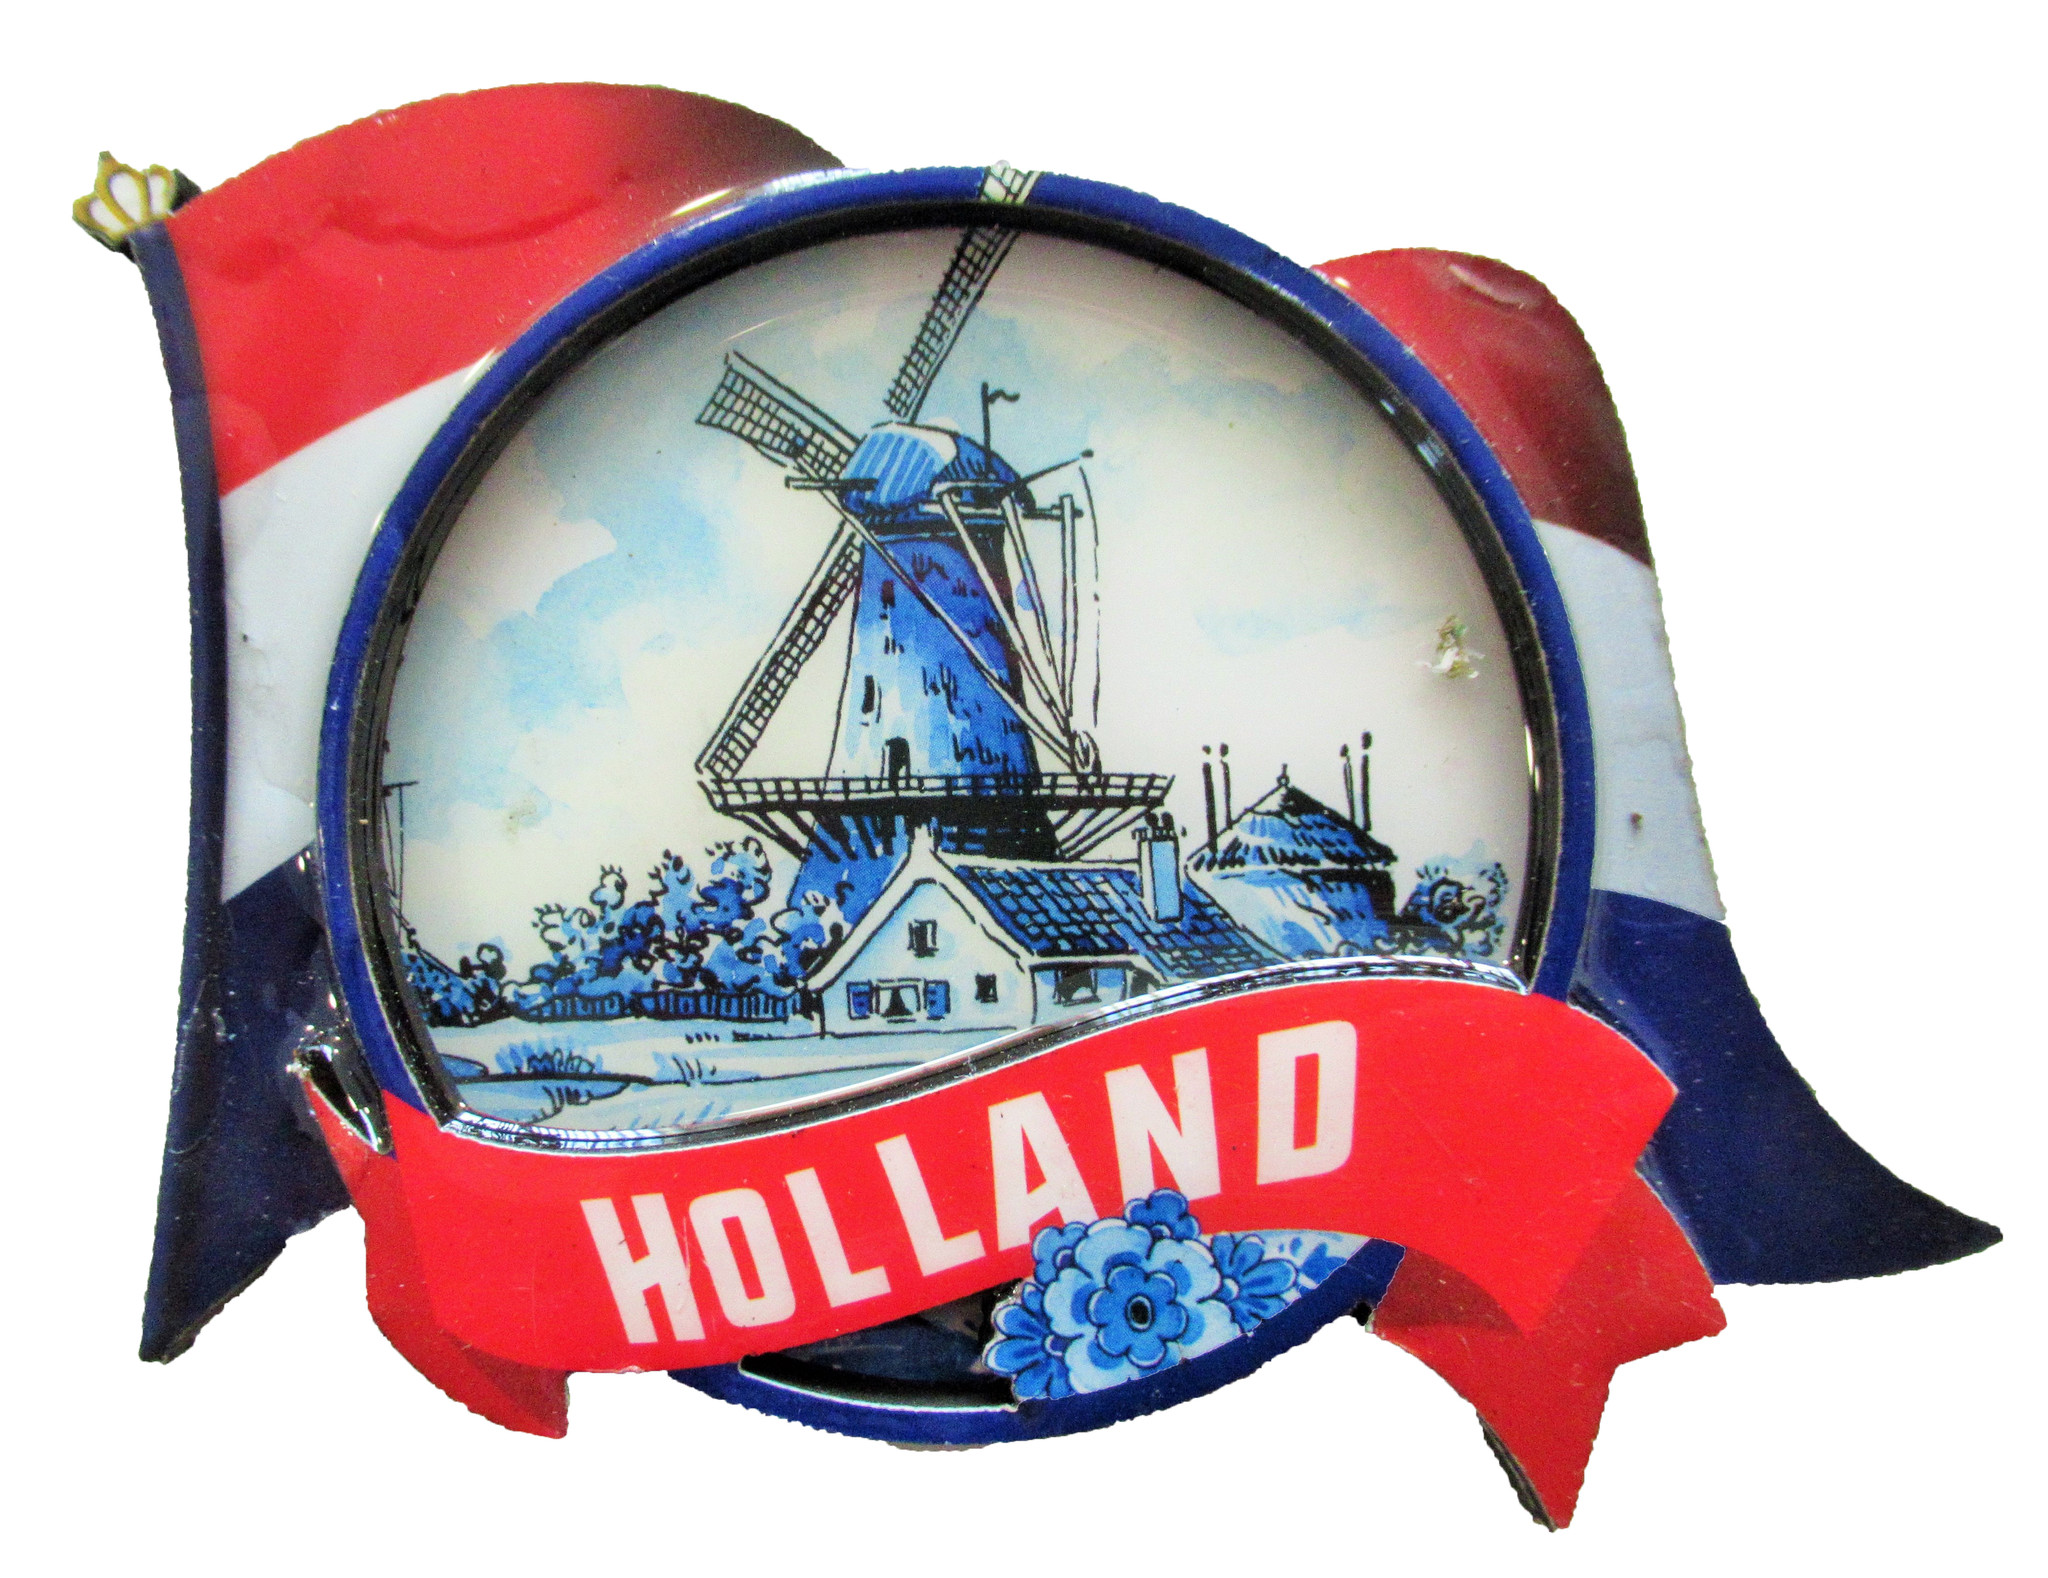 spanning Floreren Toestemming Souvenirs - Nederland - Magneet - Nederlandse vlag - Molenlandschap -  Typisch Hollands.